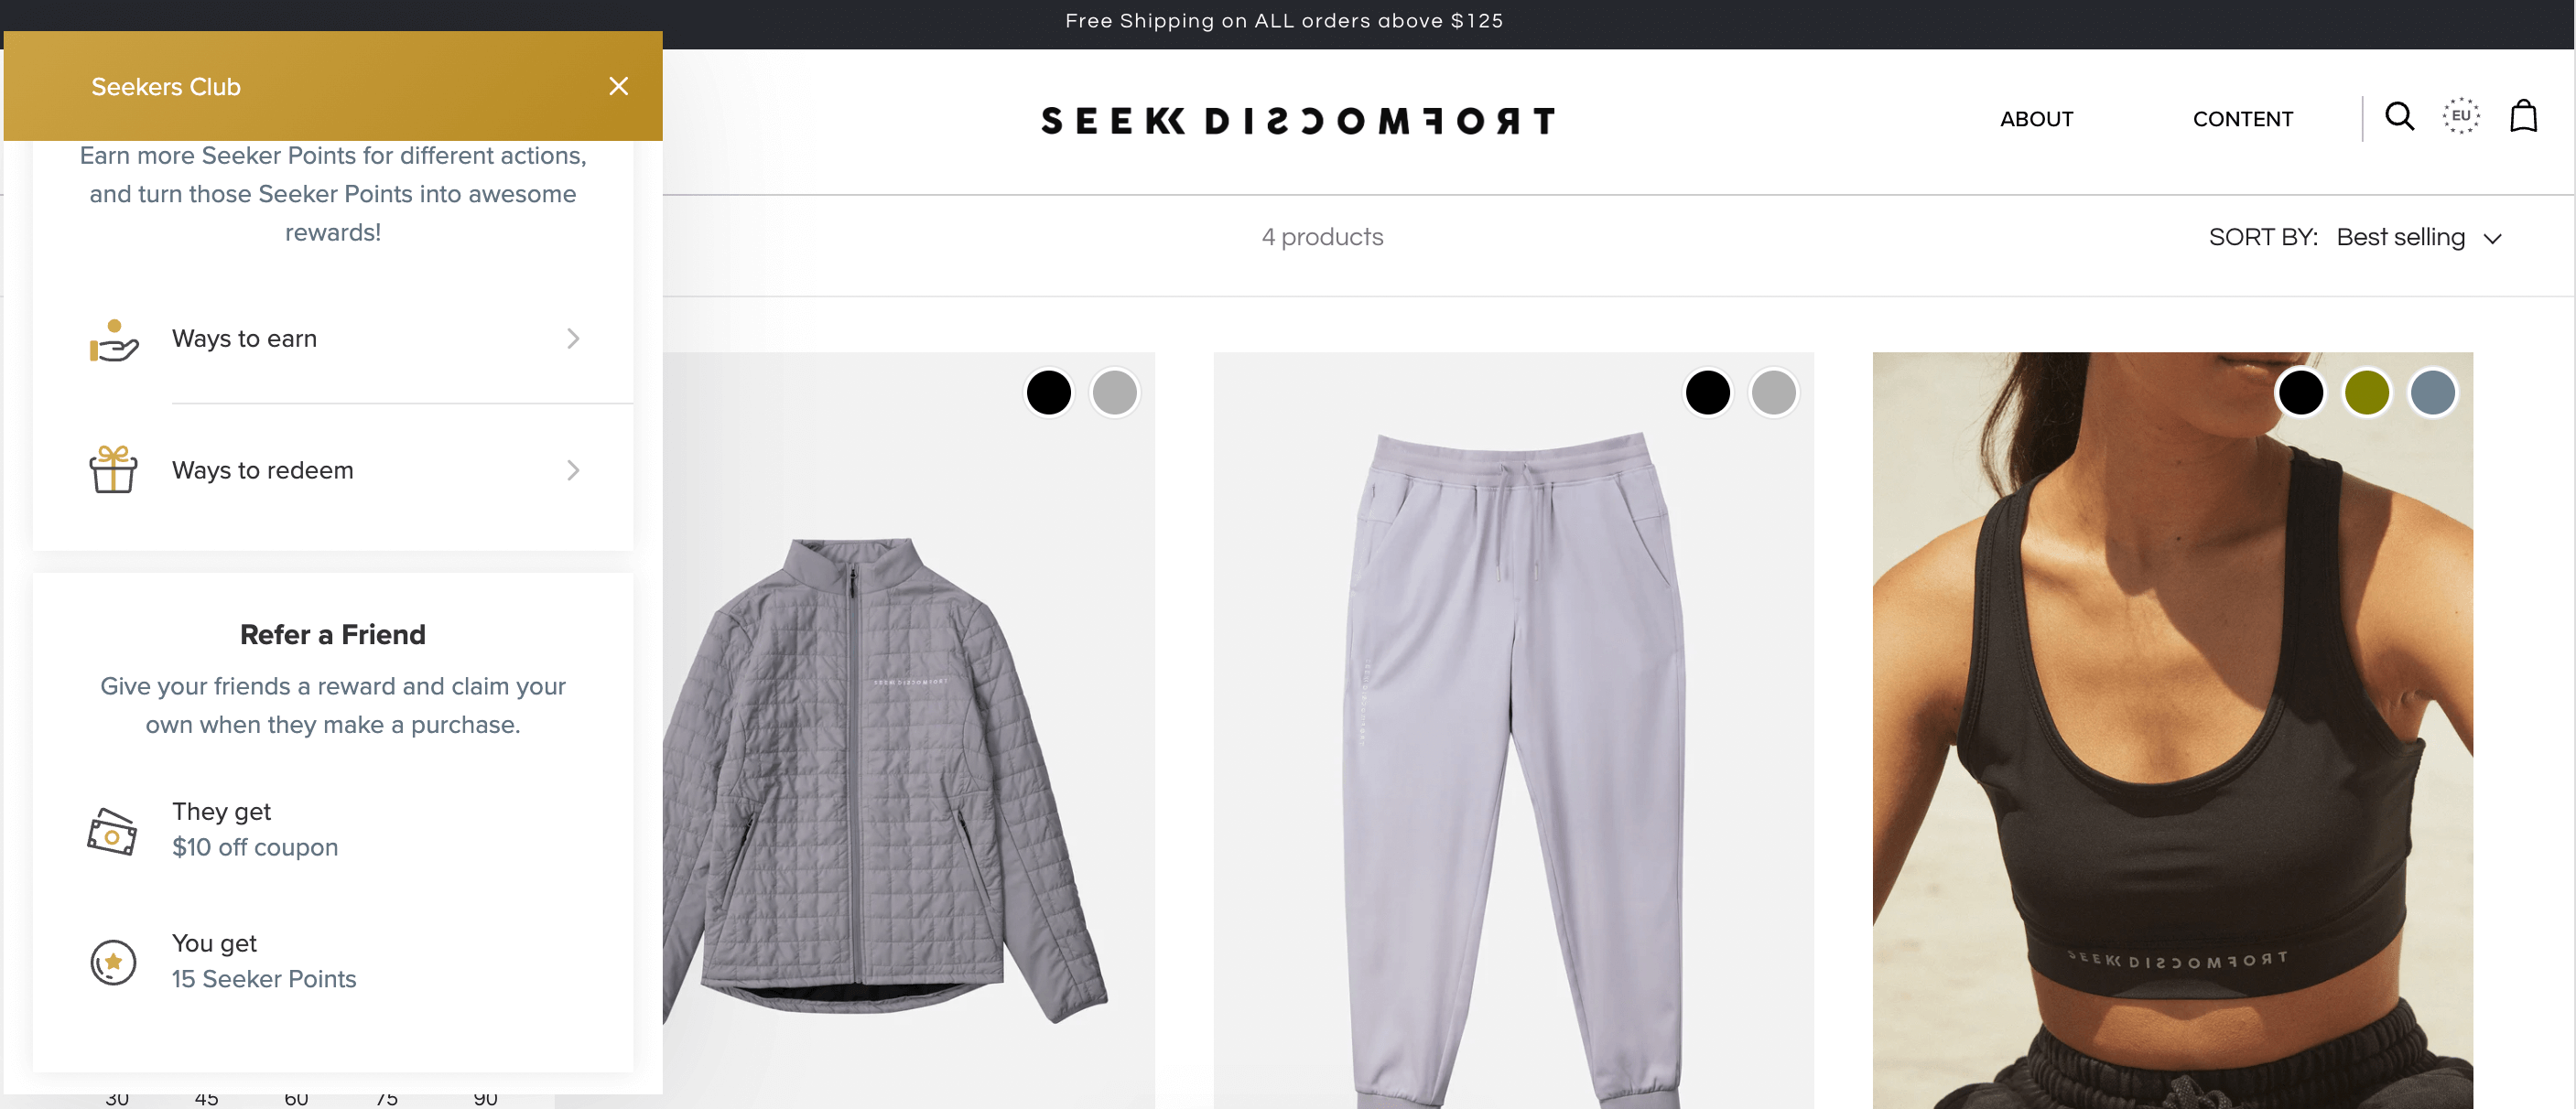 screenshot of seek discomfort apparel brand and its loyalty program seekers club